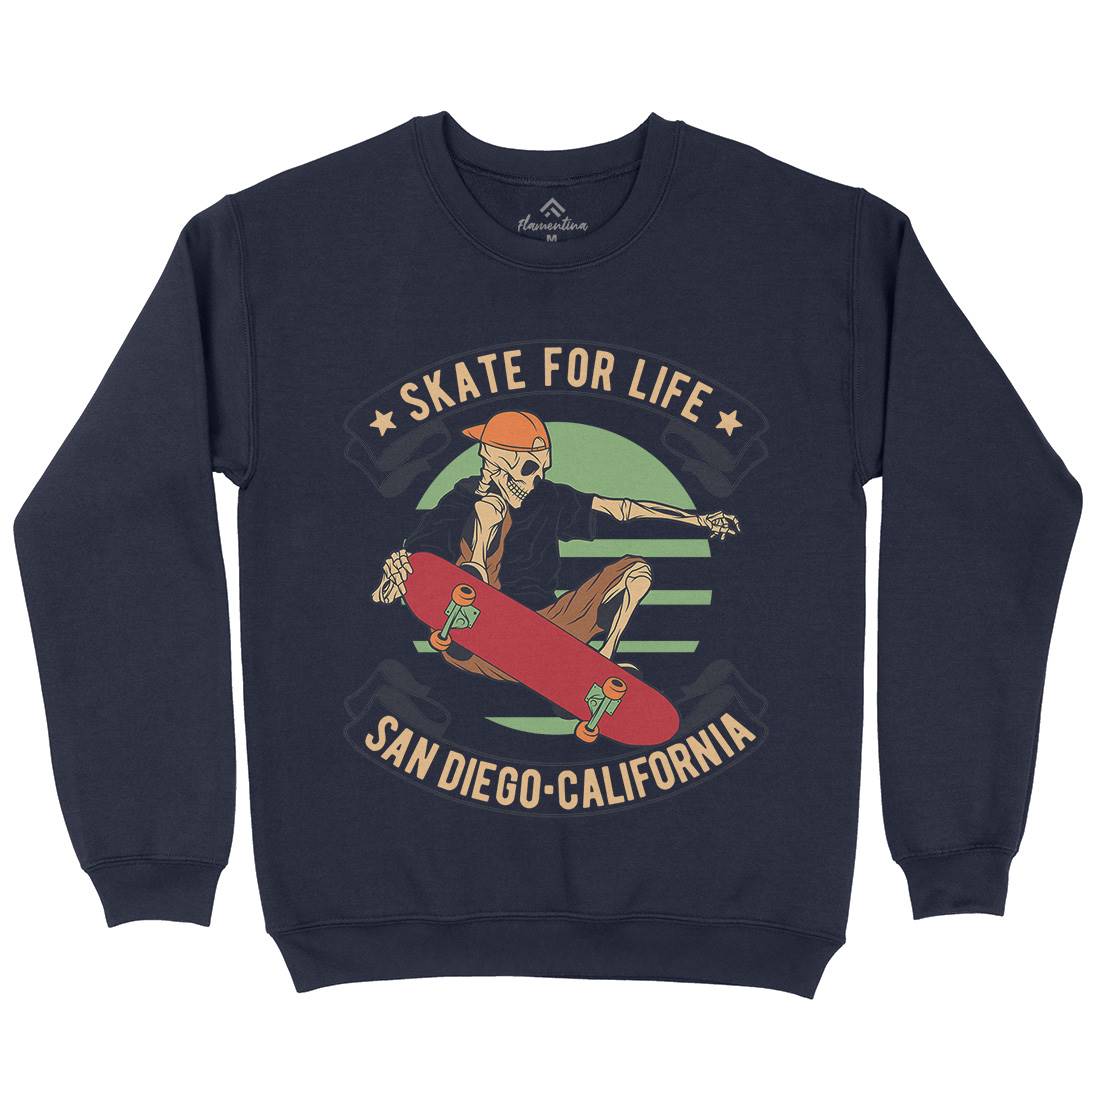 For Life Kids Crew Neck Sweatshirt Skate D970